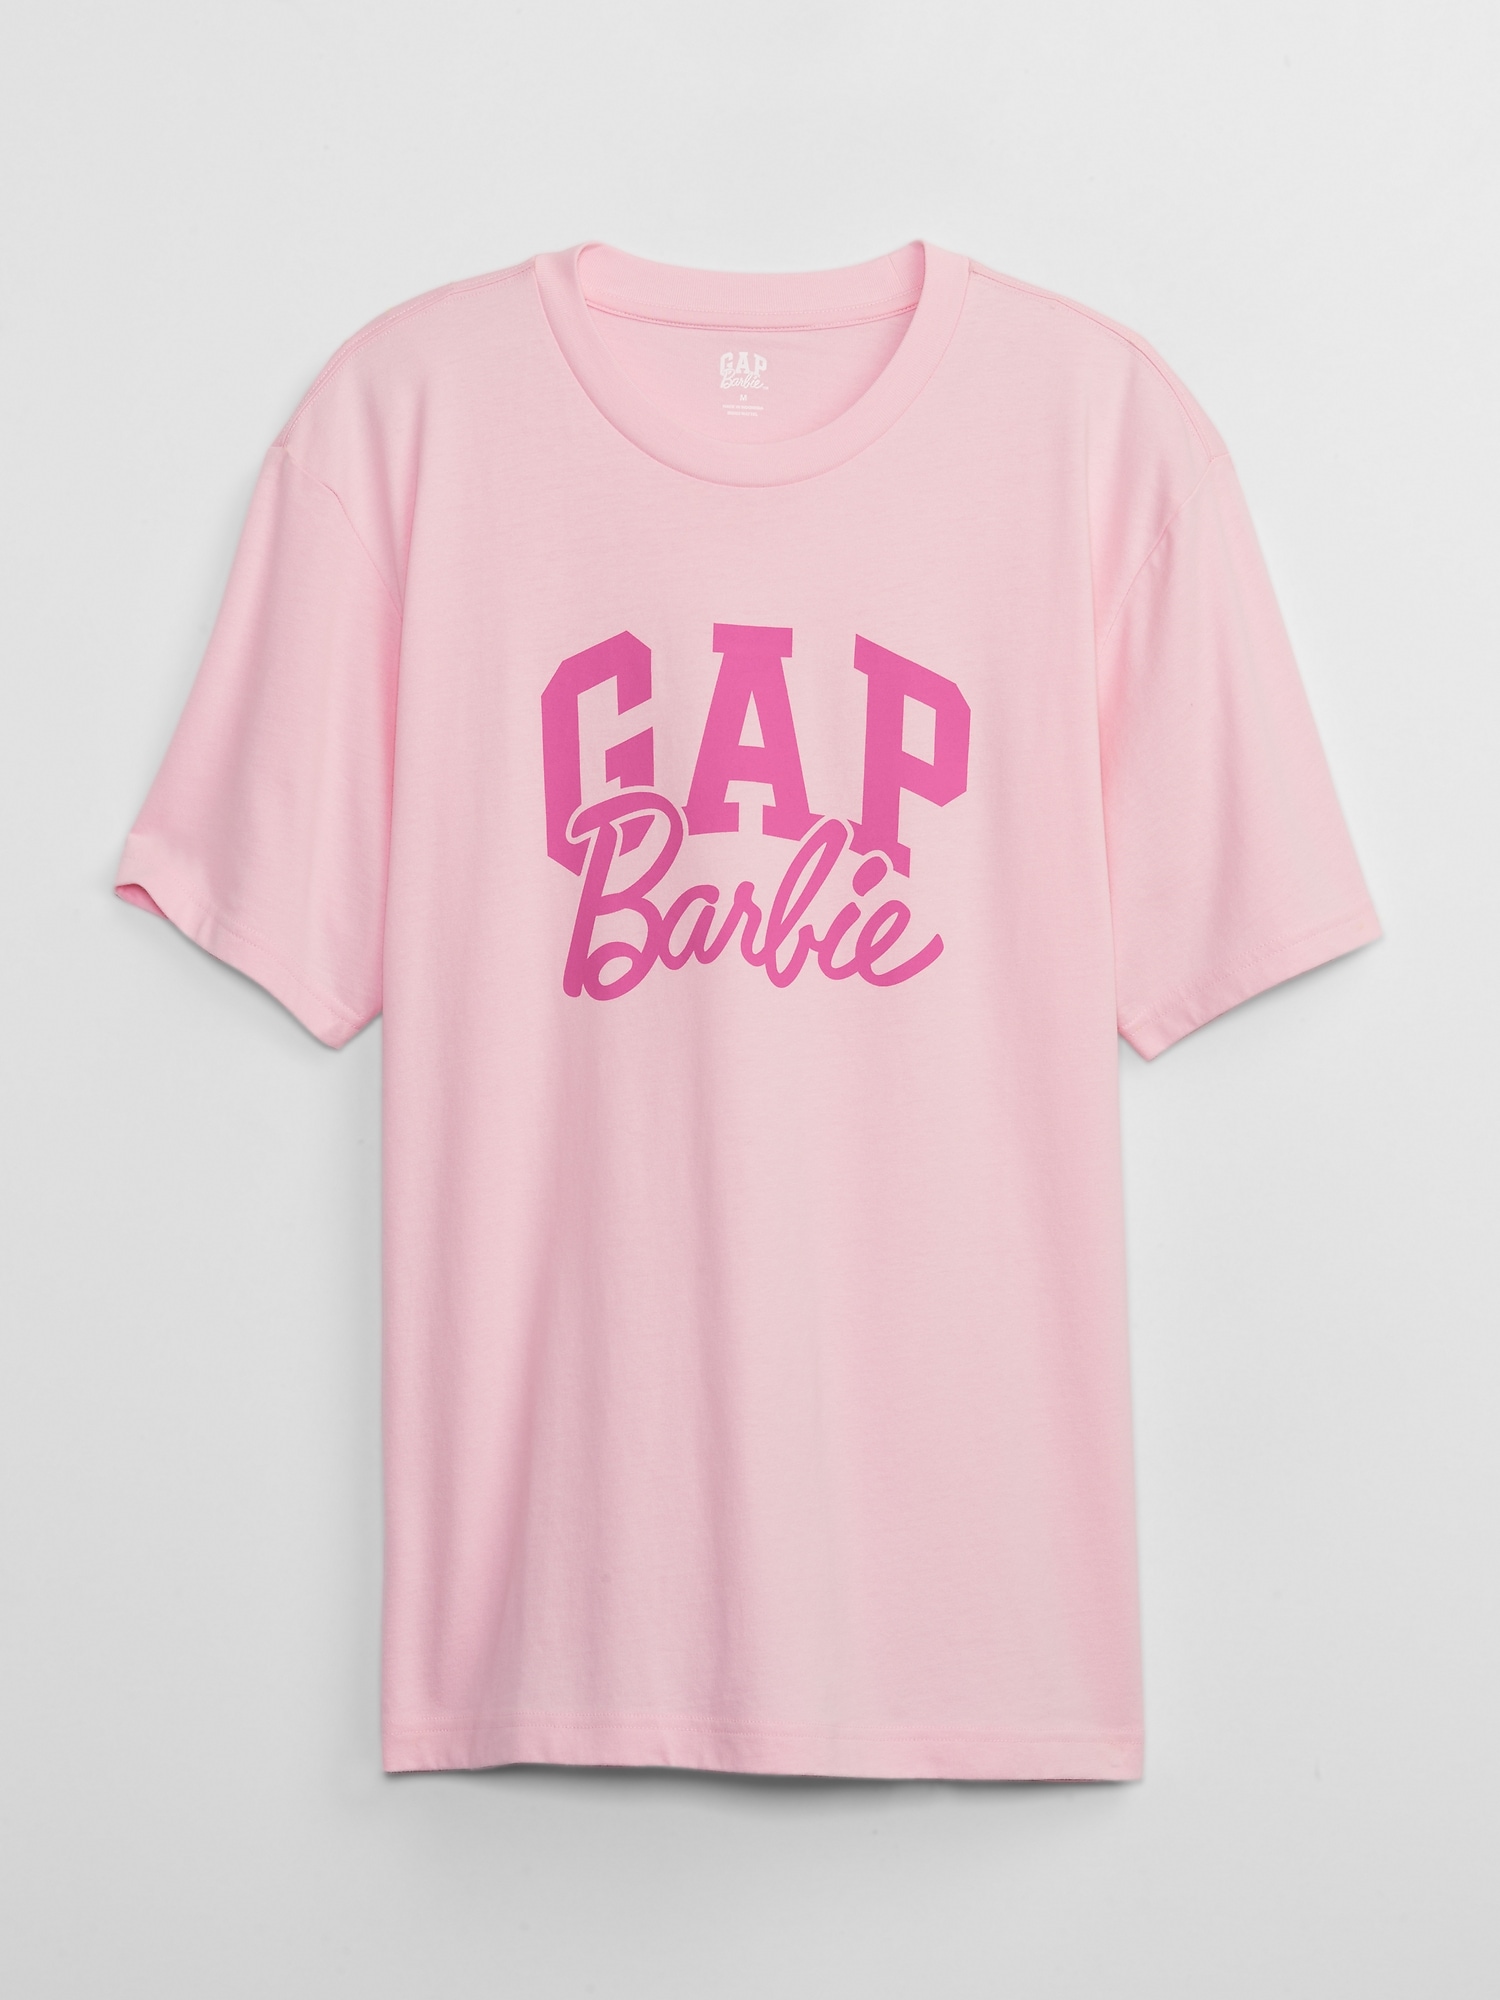 White Barbie Shirt, Adult Barbie Shirt Size S - XL, Barbie Girl Shirt